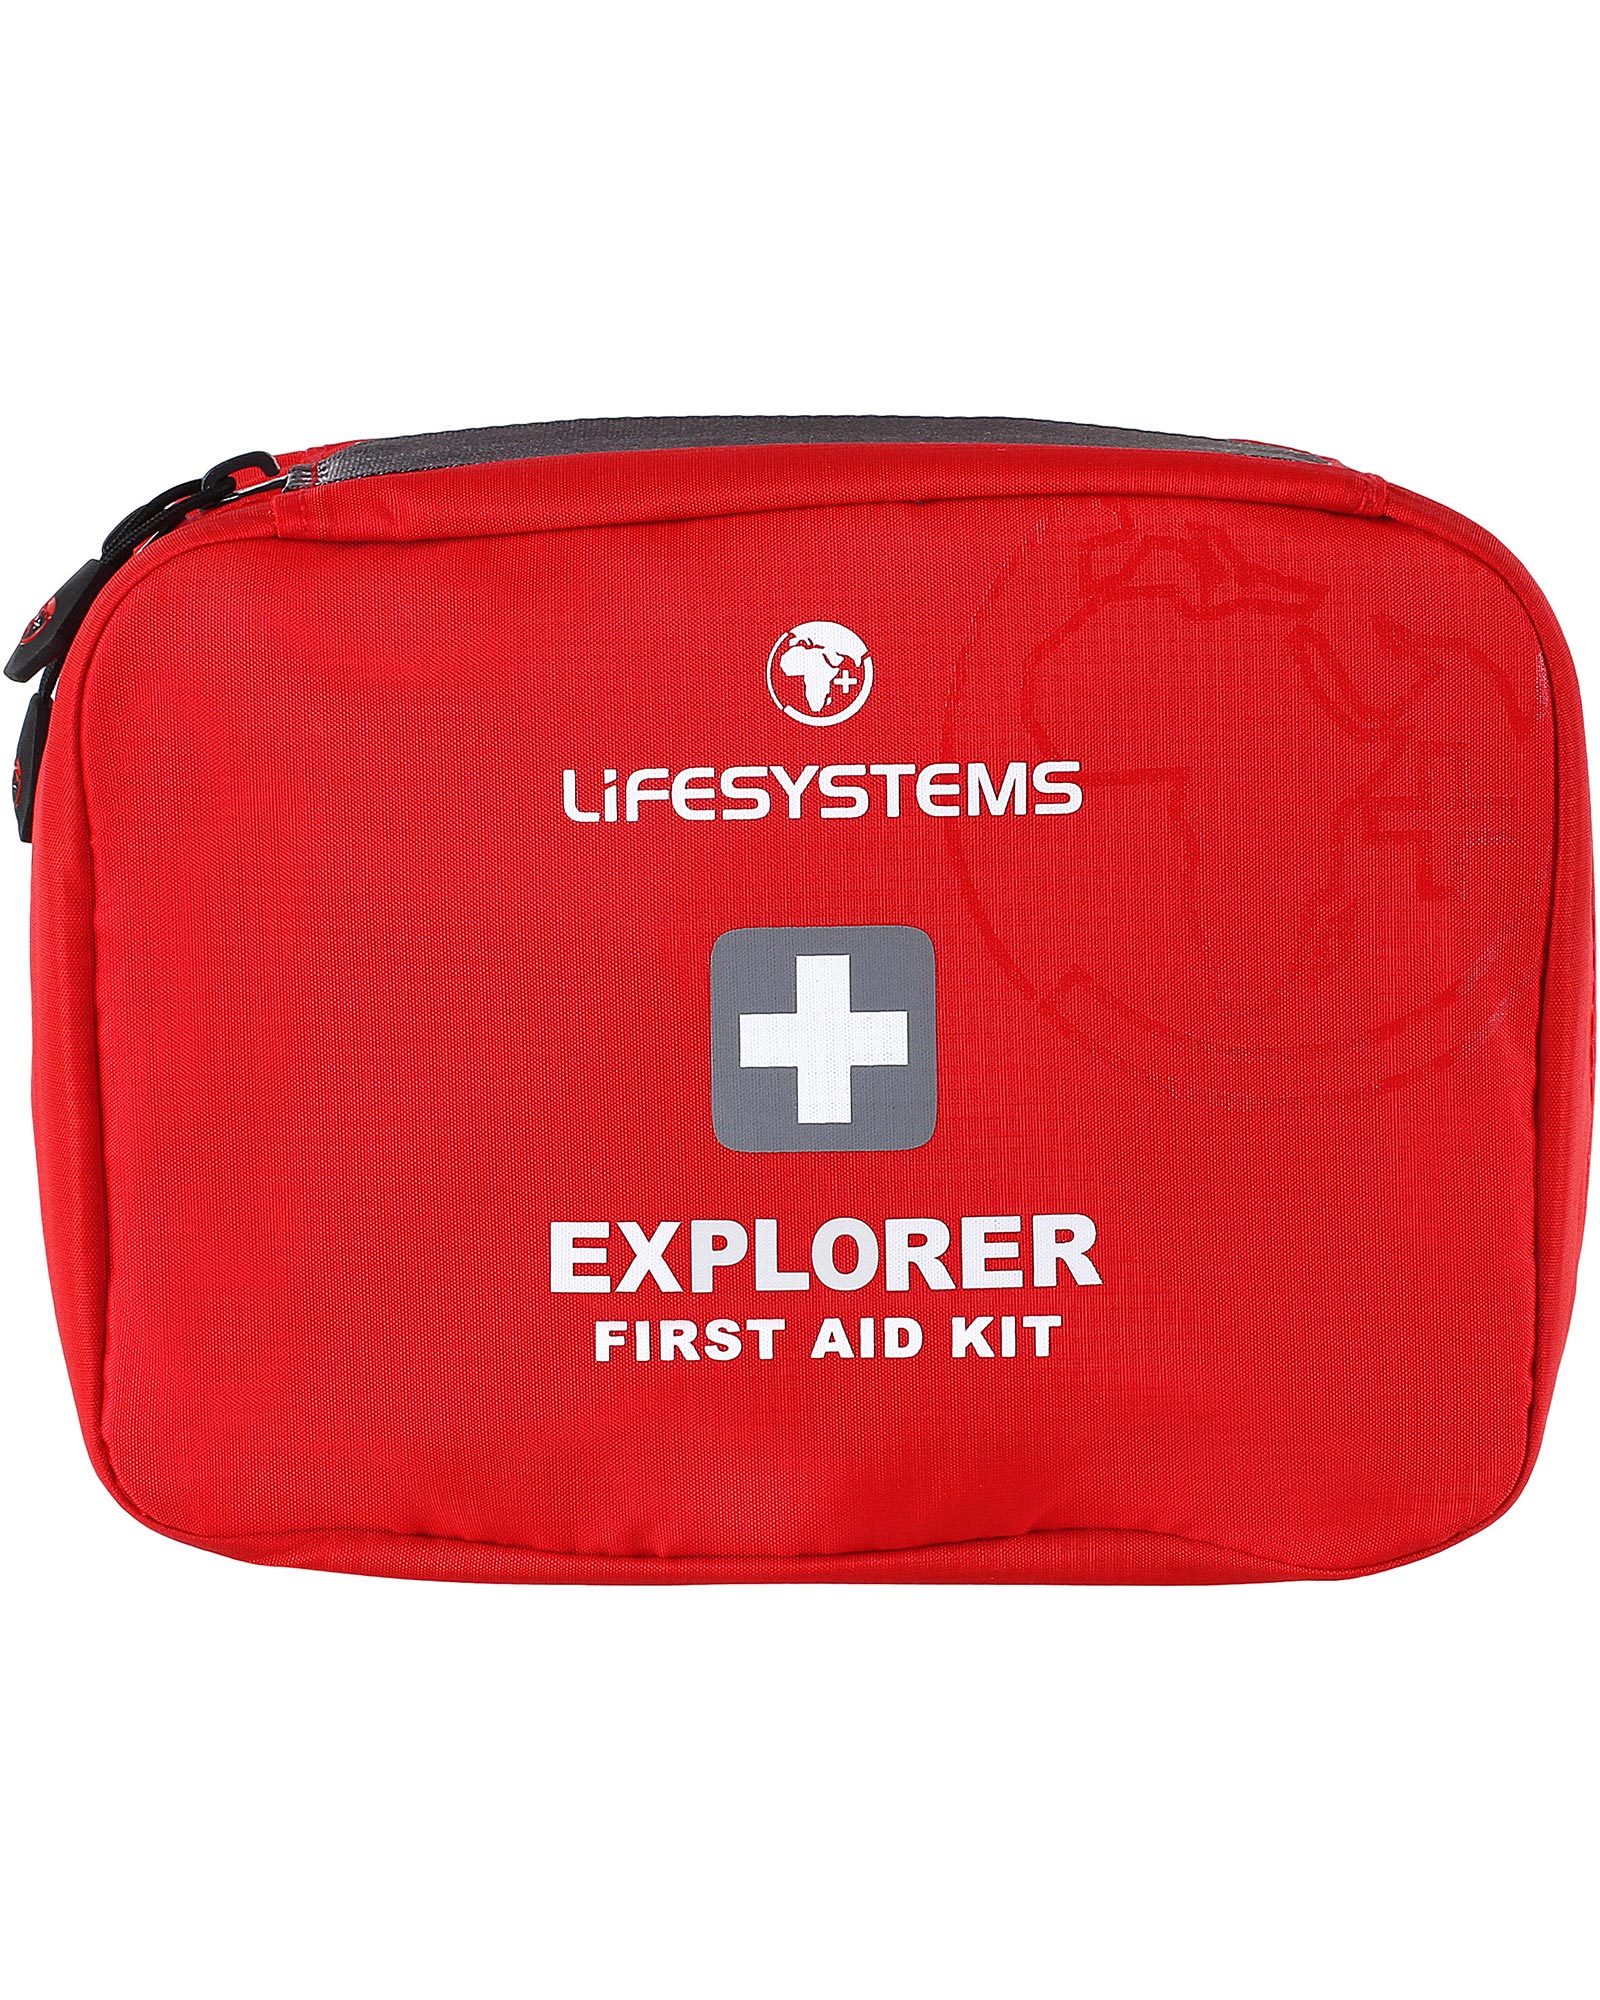 Lifesystems explorer First Aid Kit